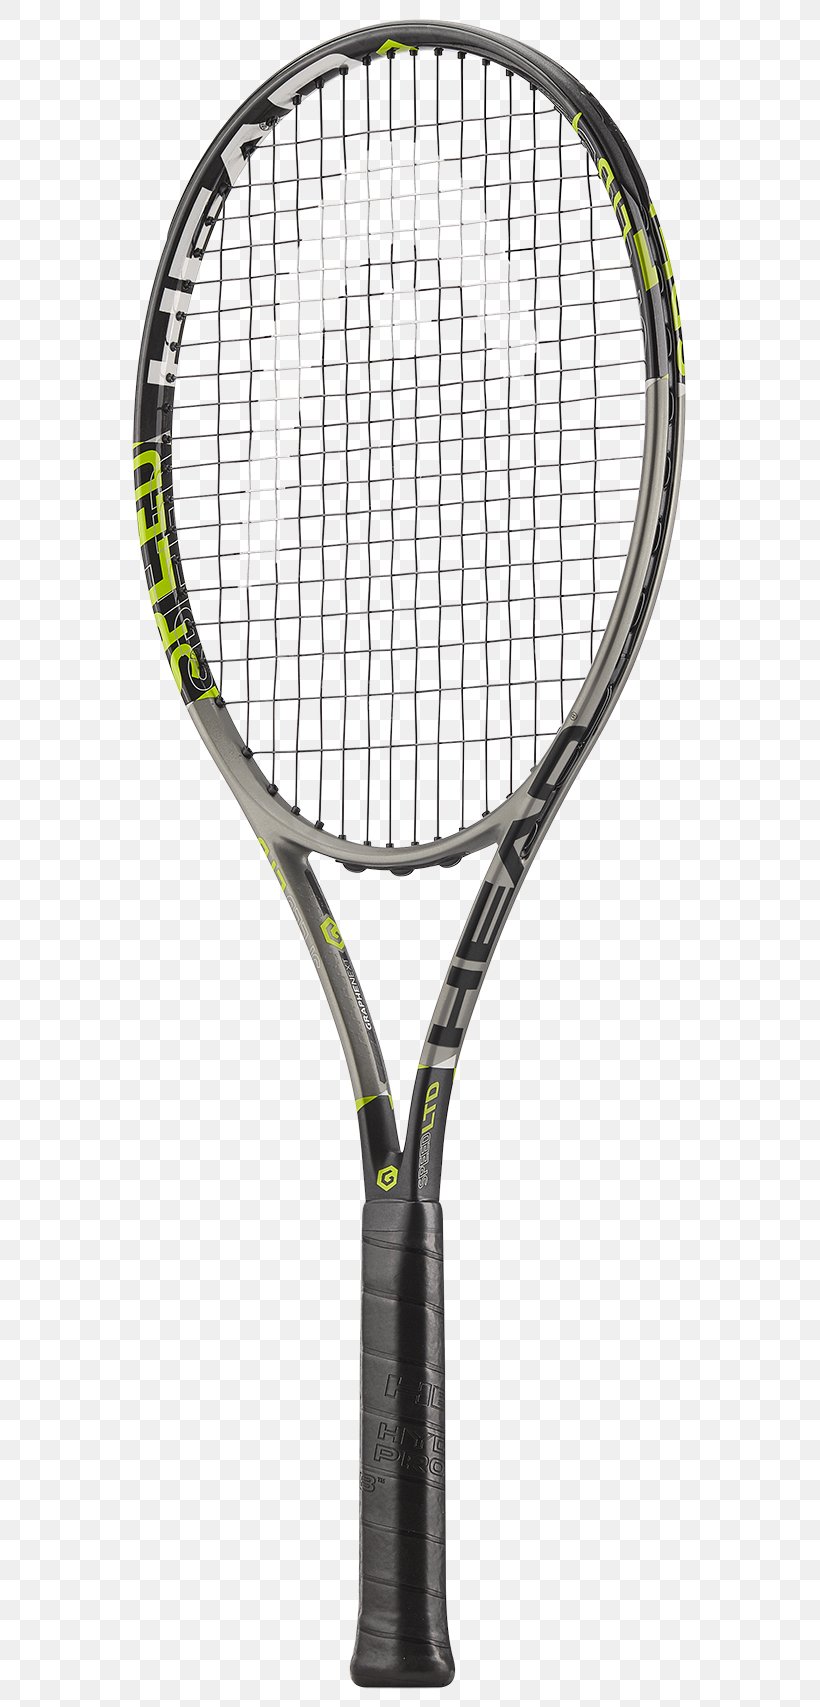 Rakieta Tenisowa Racket Head Graphene Tennis, PNG, 591x1707px, Rakieta Tenisowa, Babolat, Badminton, Graphene, Graphite Download Free